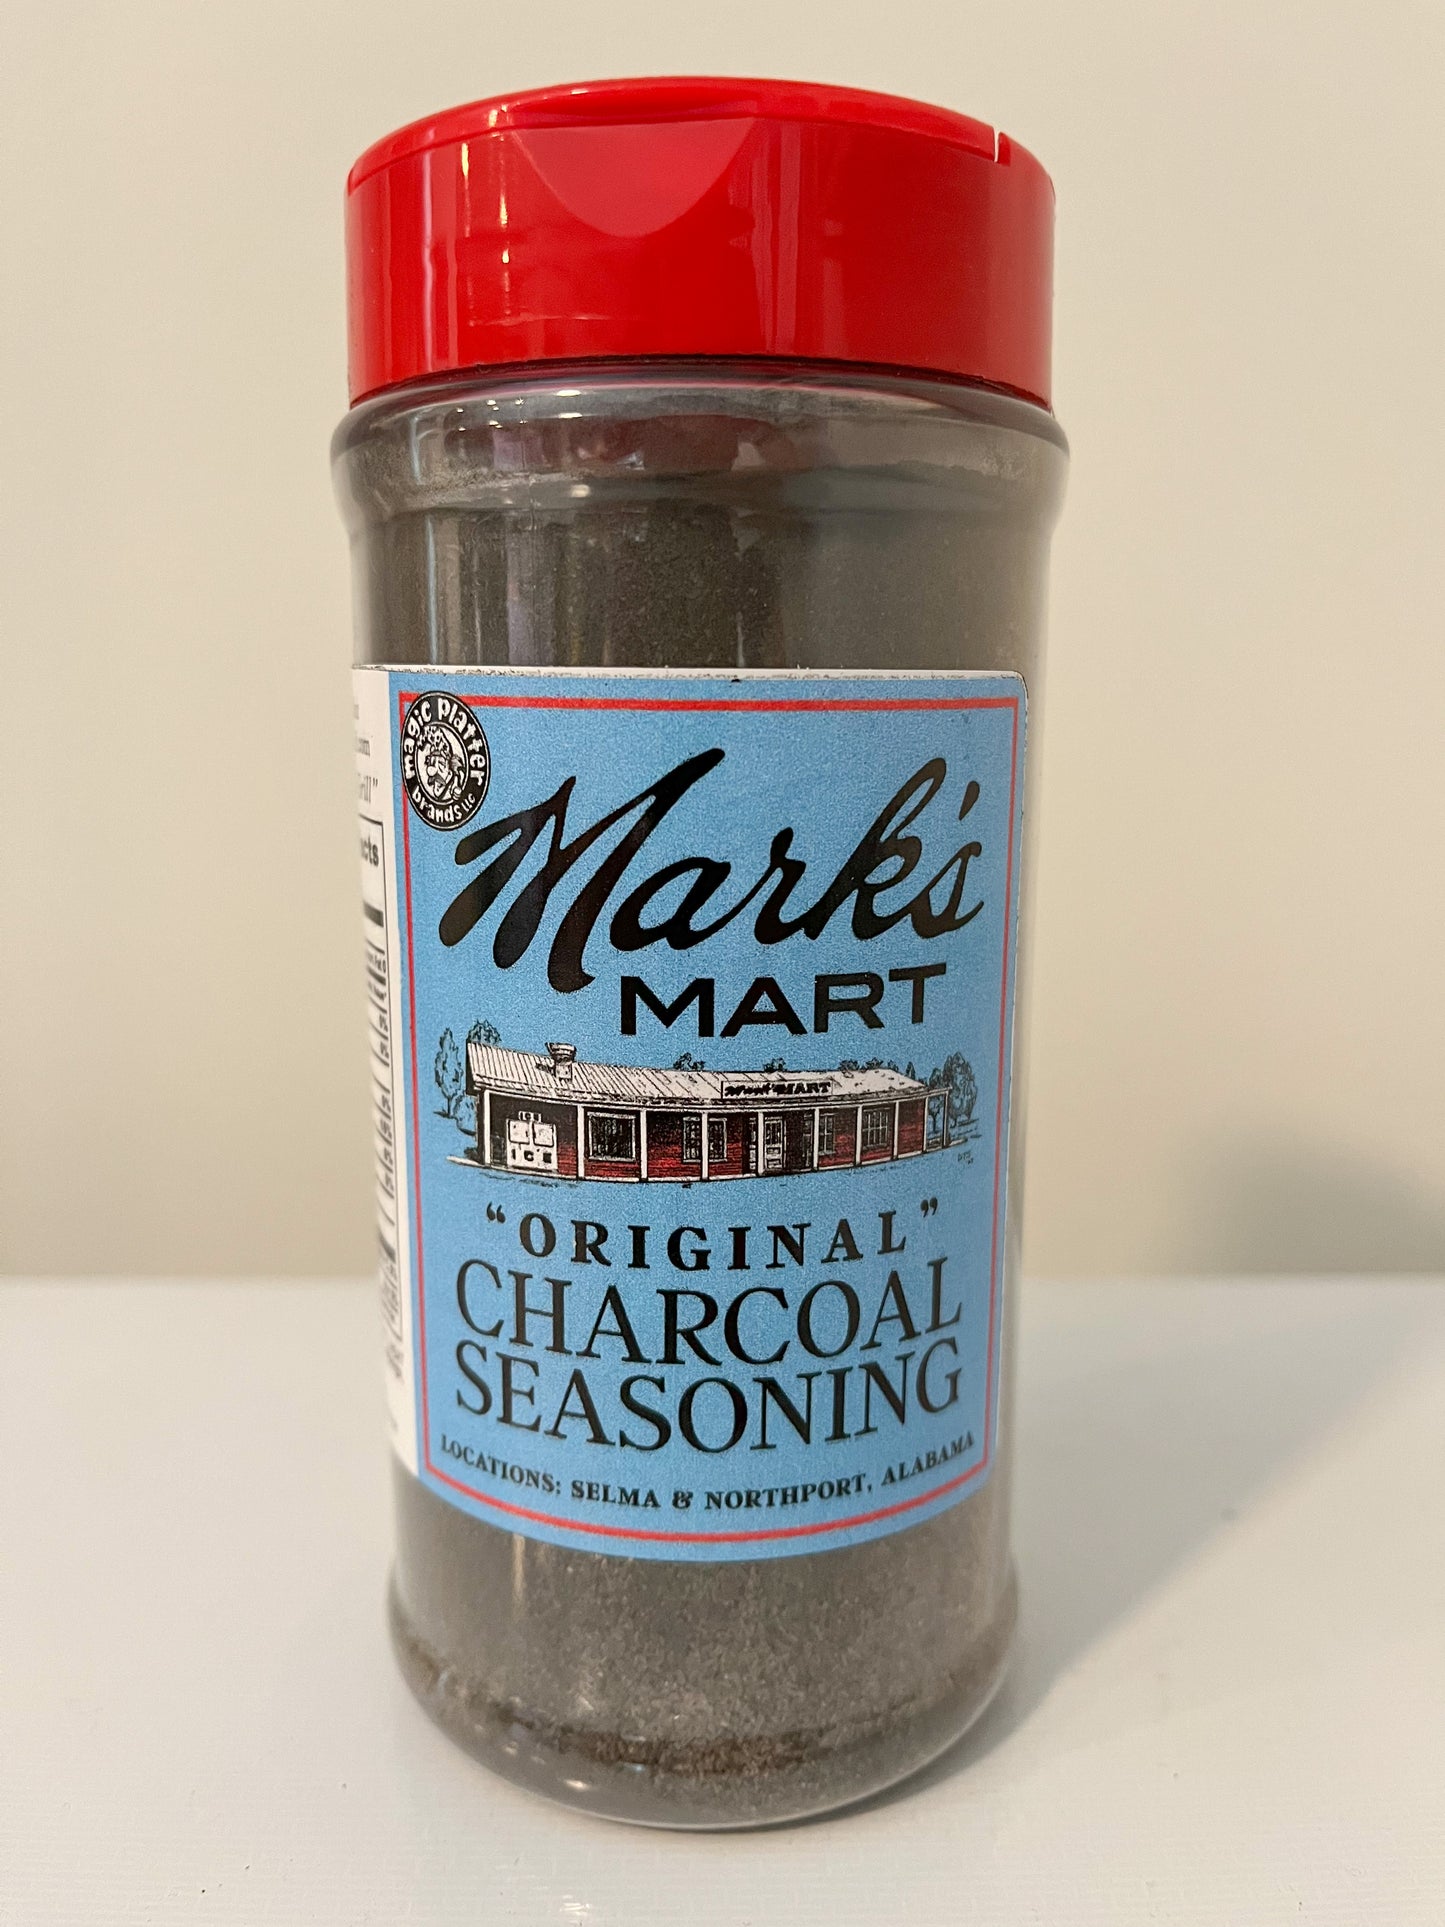 Mark’s Mart Original Charcoal Seasoning